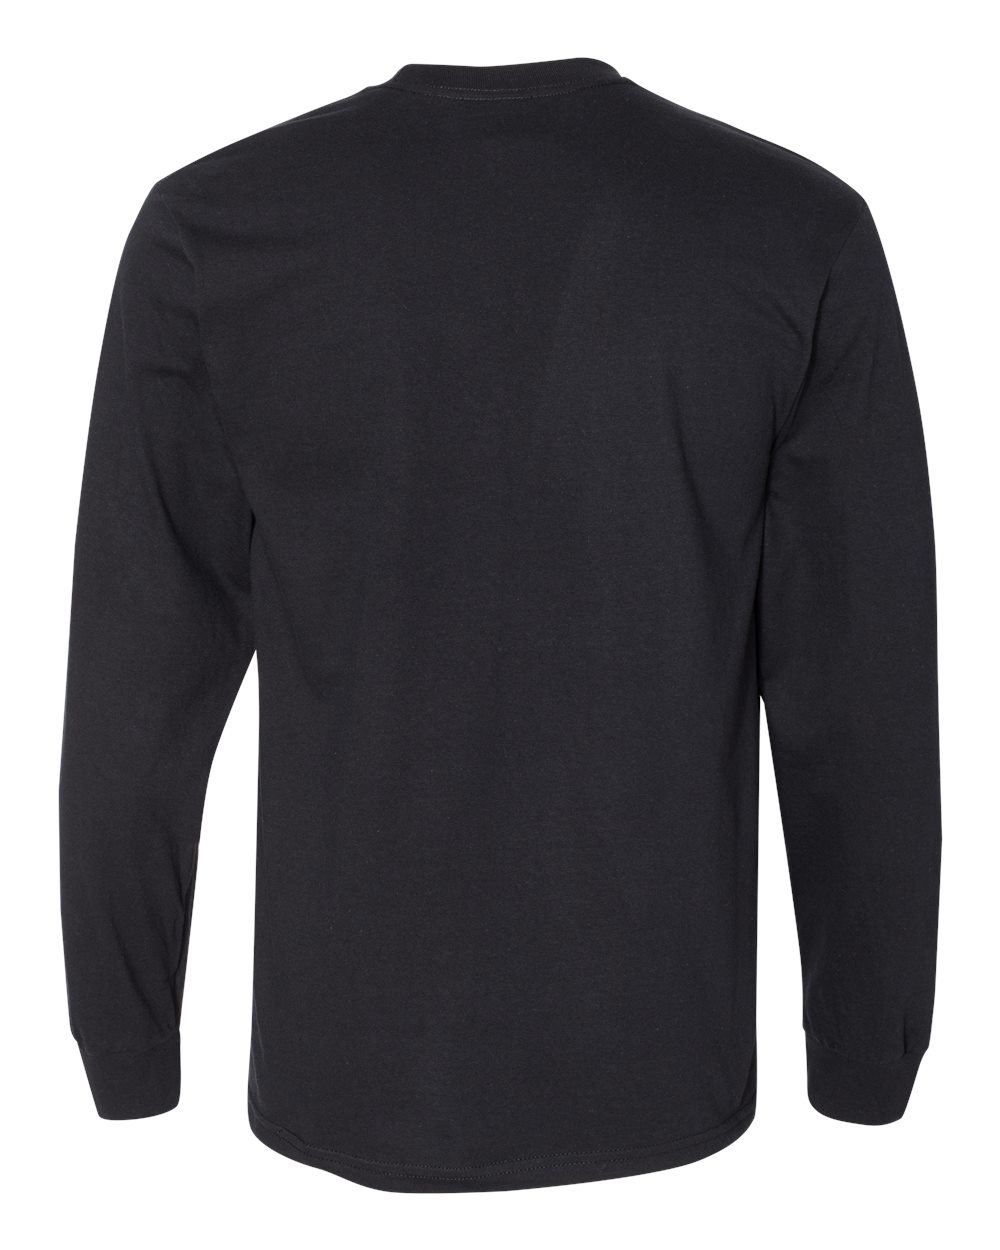 custom apparel gildan hammer long sleeve tee shirt pullover in multiple sizes and colors